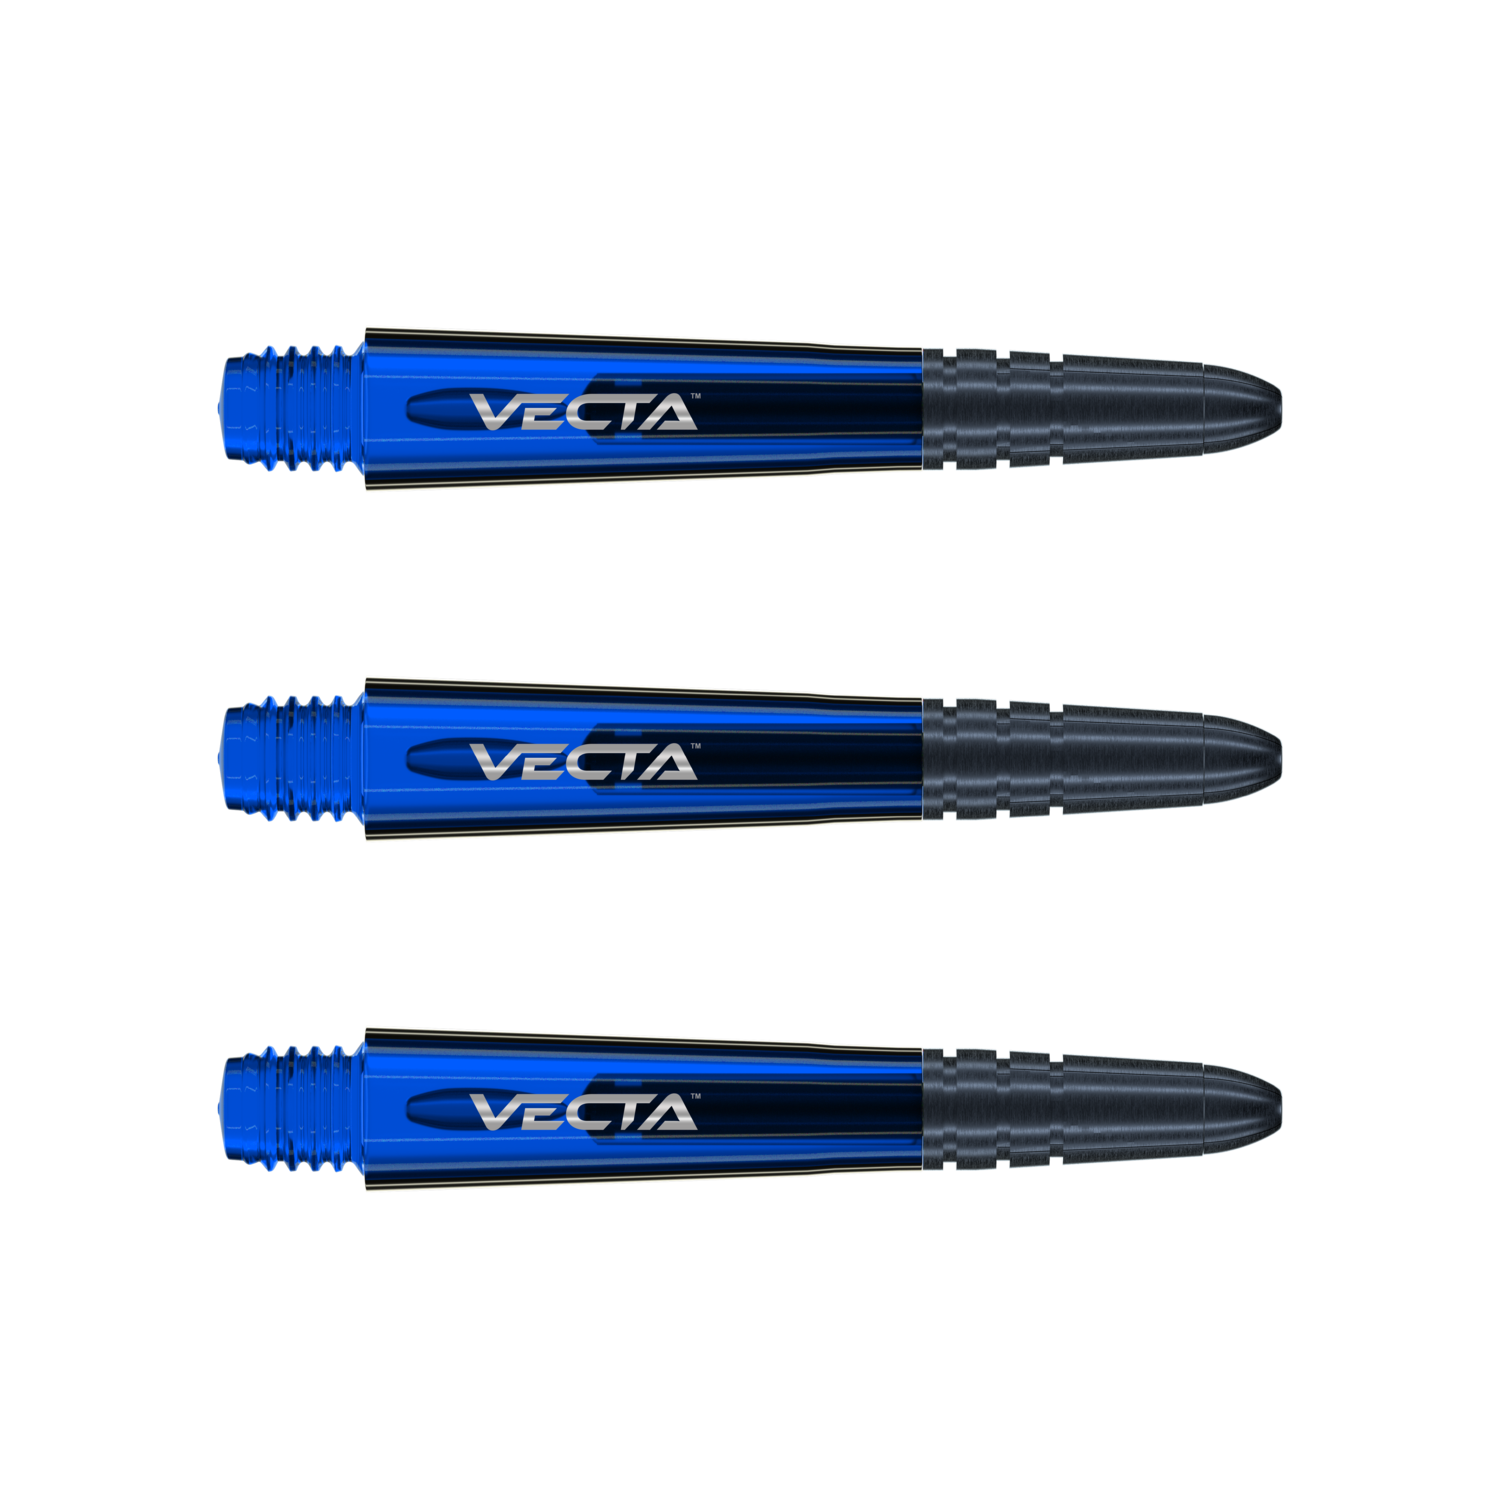 Vecta medium blue shafts